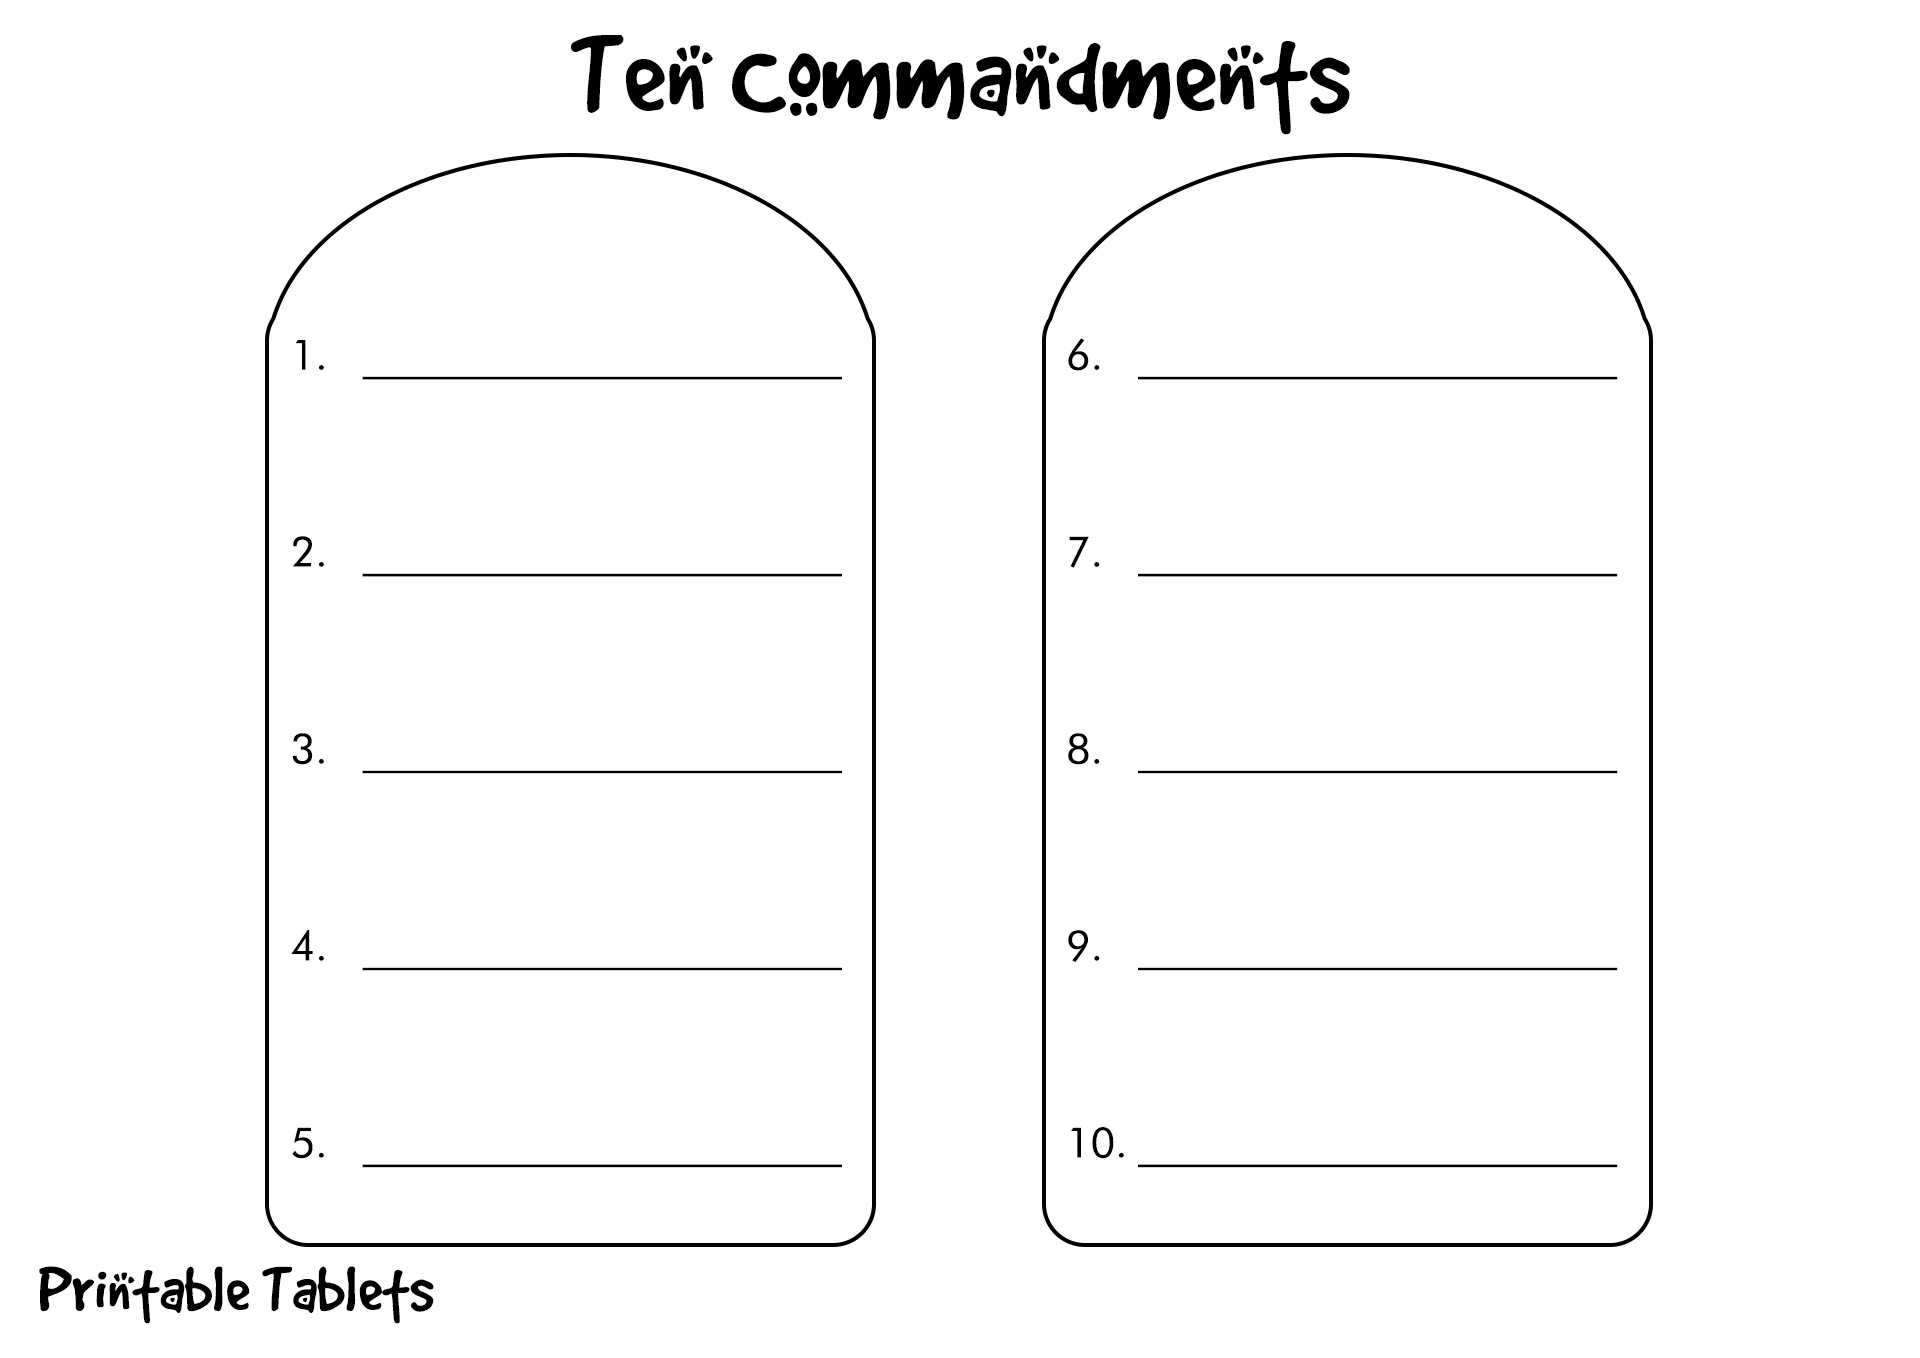 17-10-commandments-blank-worksheet-free-pdf-at-worksheeto